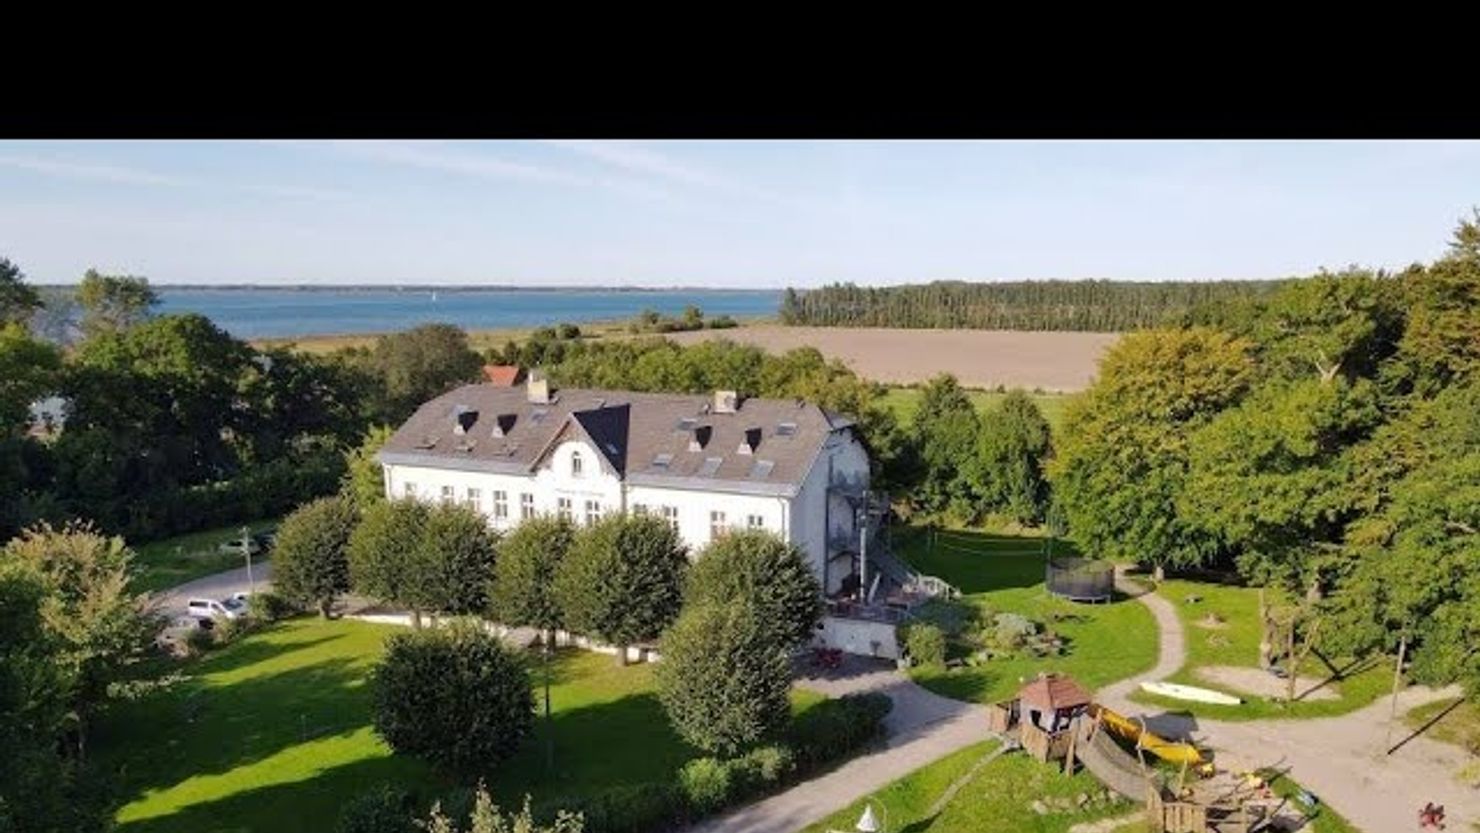 Video: Video: Ferienappartements an der Ostsee